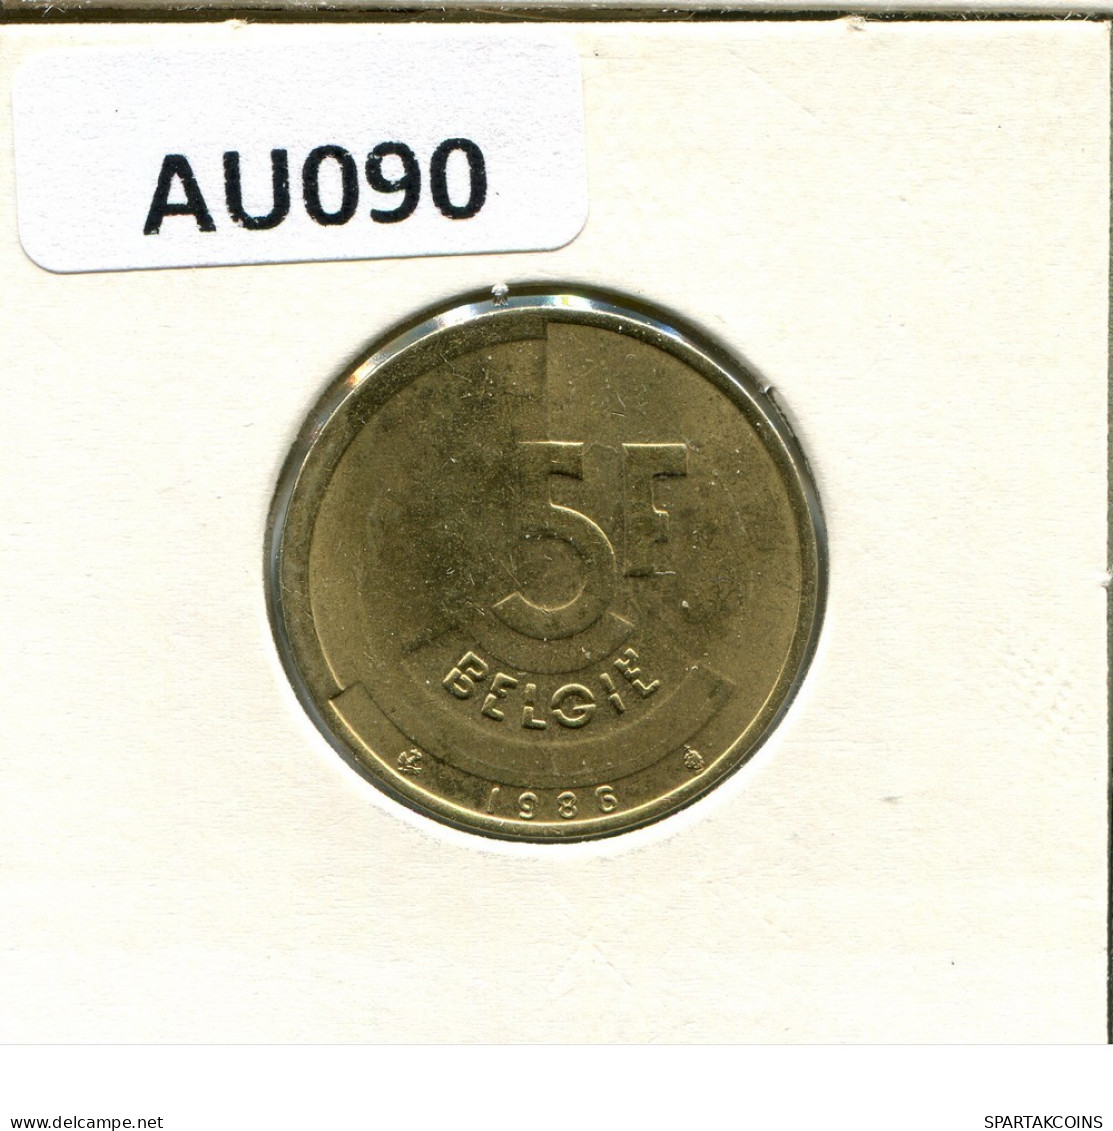 5 FRANCS 1986 DUTCH Text BELGIQUE BELGIUM Pièce #AU090.F.A - 5 Francs